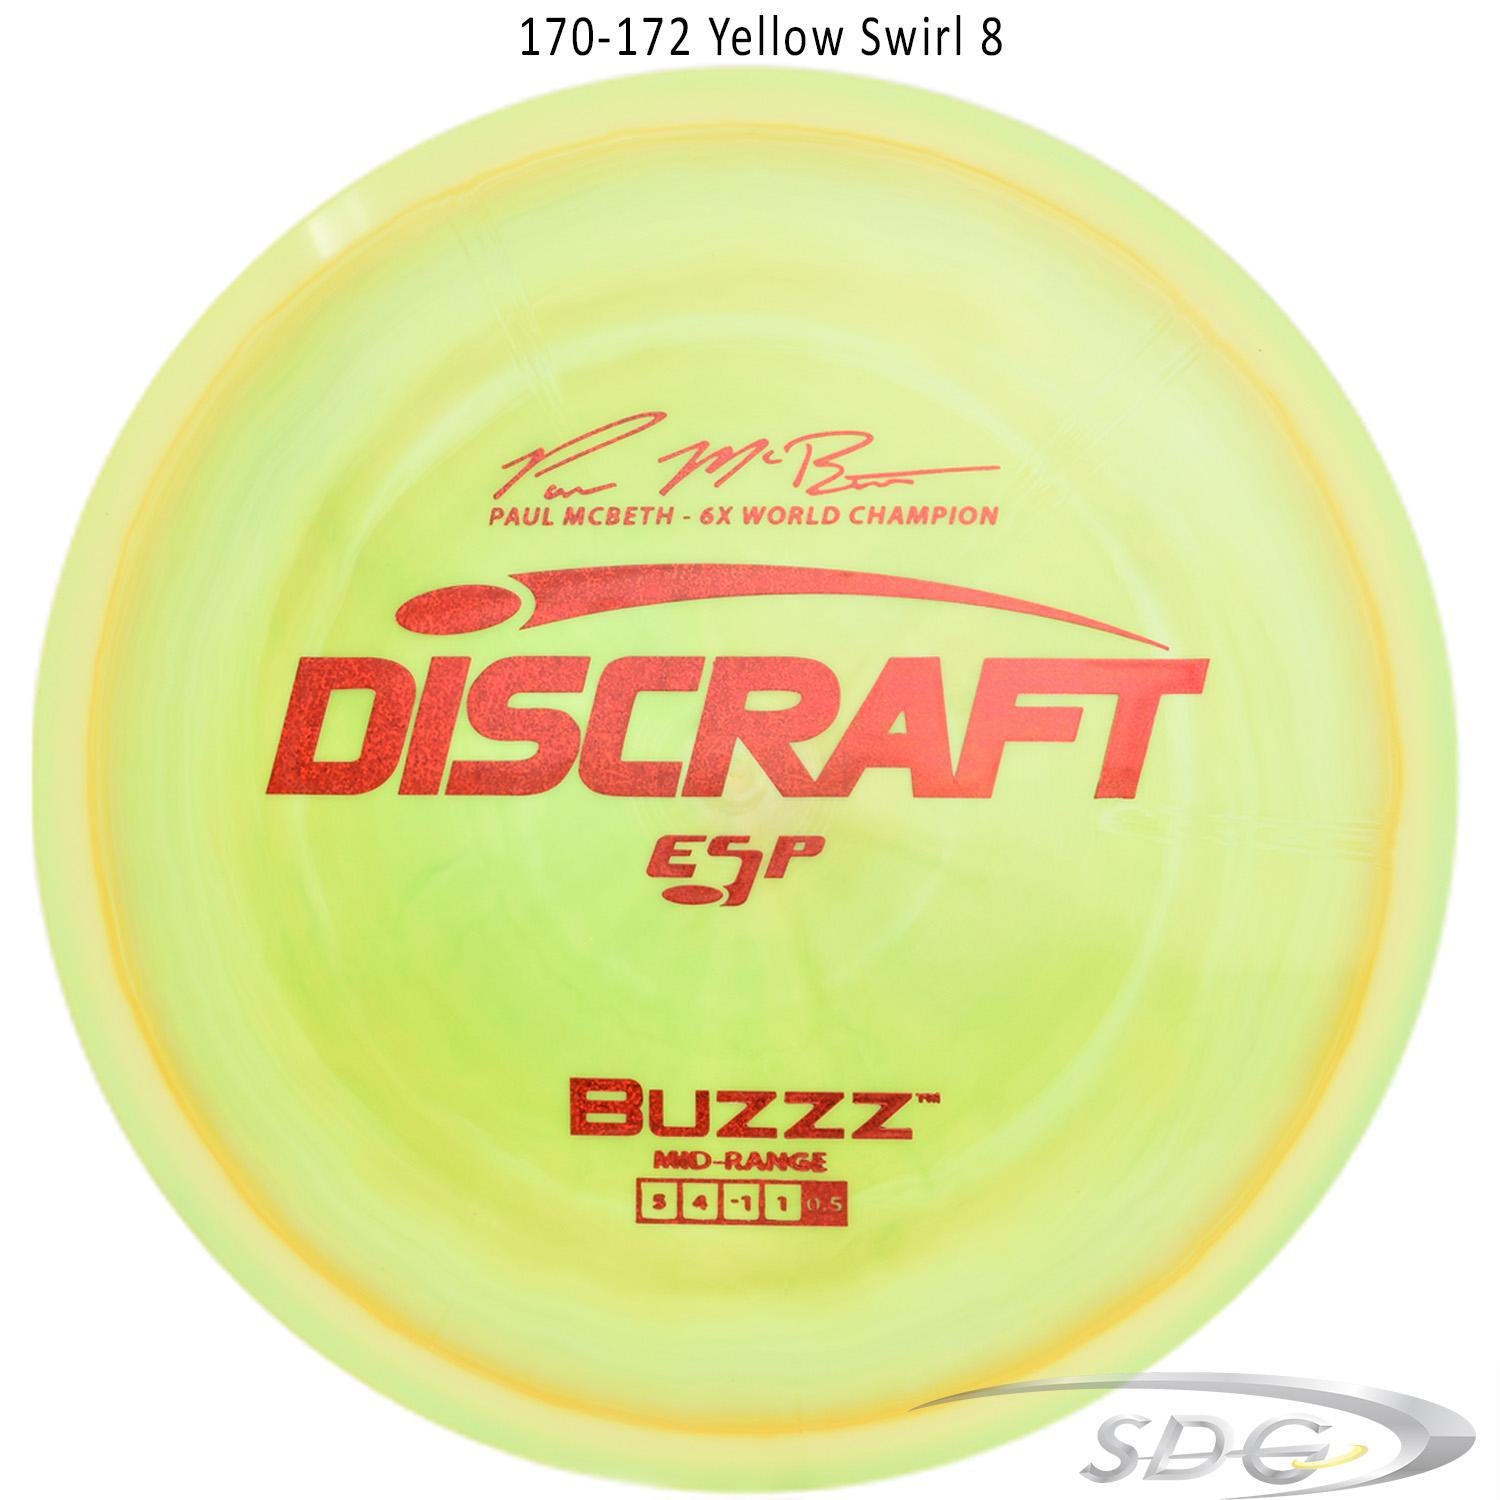 discraft-esp-buzzz-6x-paul-mcbeth-signature-series-disc-golf-mid-range-172-170-weights 170-172 Yellow Swirl 8 